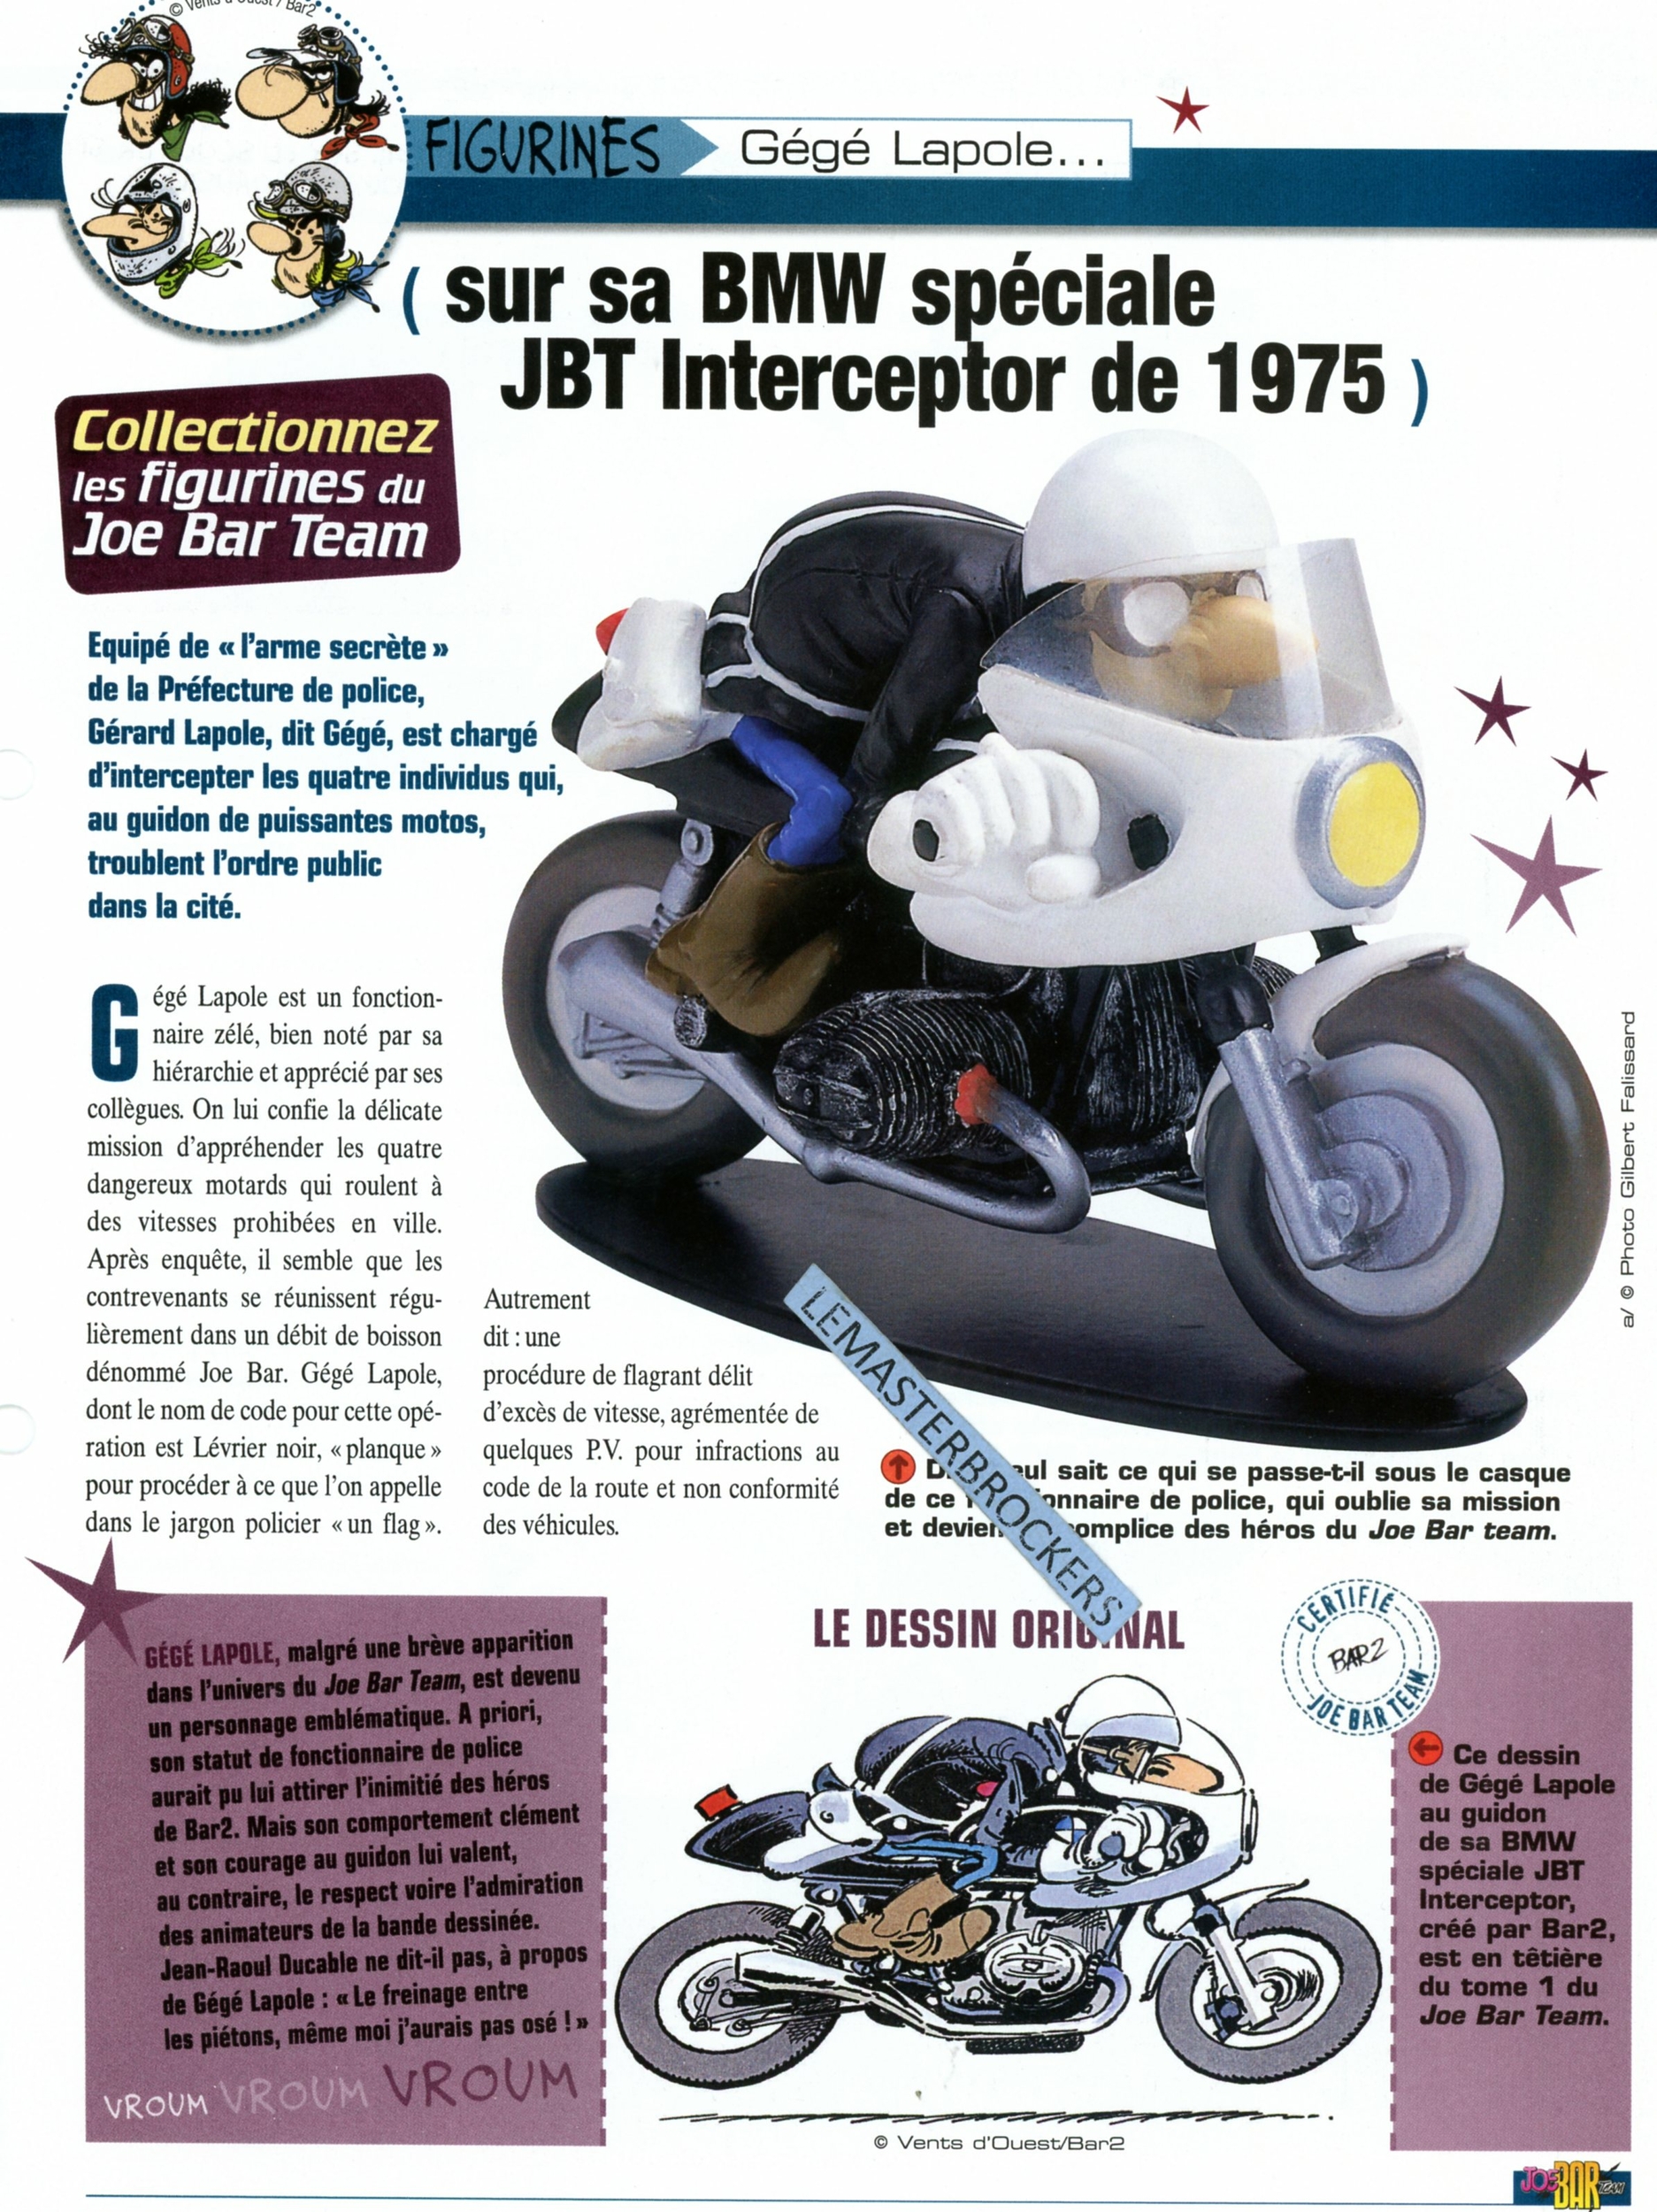 BMW SPÉCIALE JBT INTERCEPTOR 1975 JOE BAR TEAM GÉGÉ LAPOLE - FICHE MOTO -LEMASTERBROCKERS